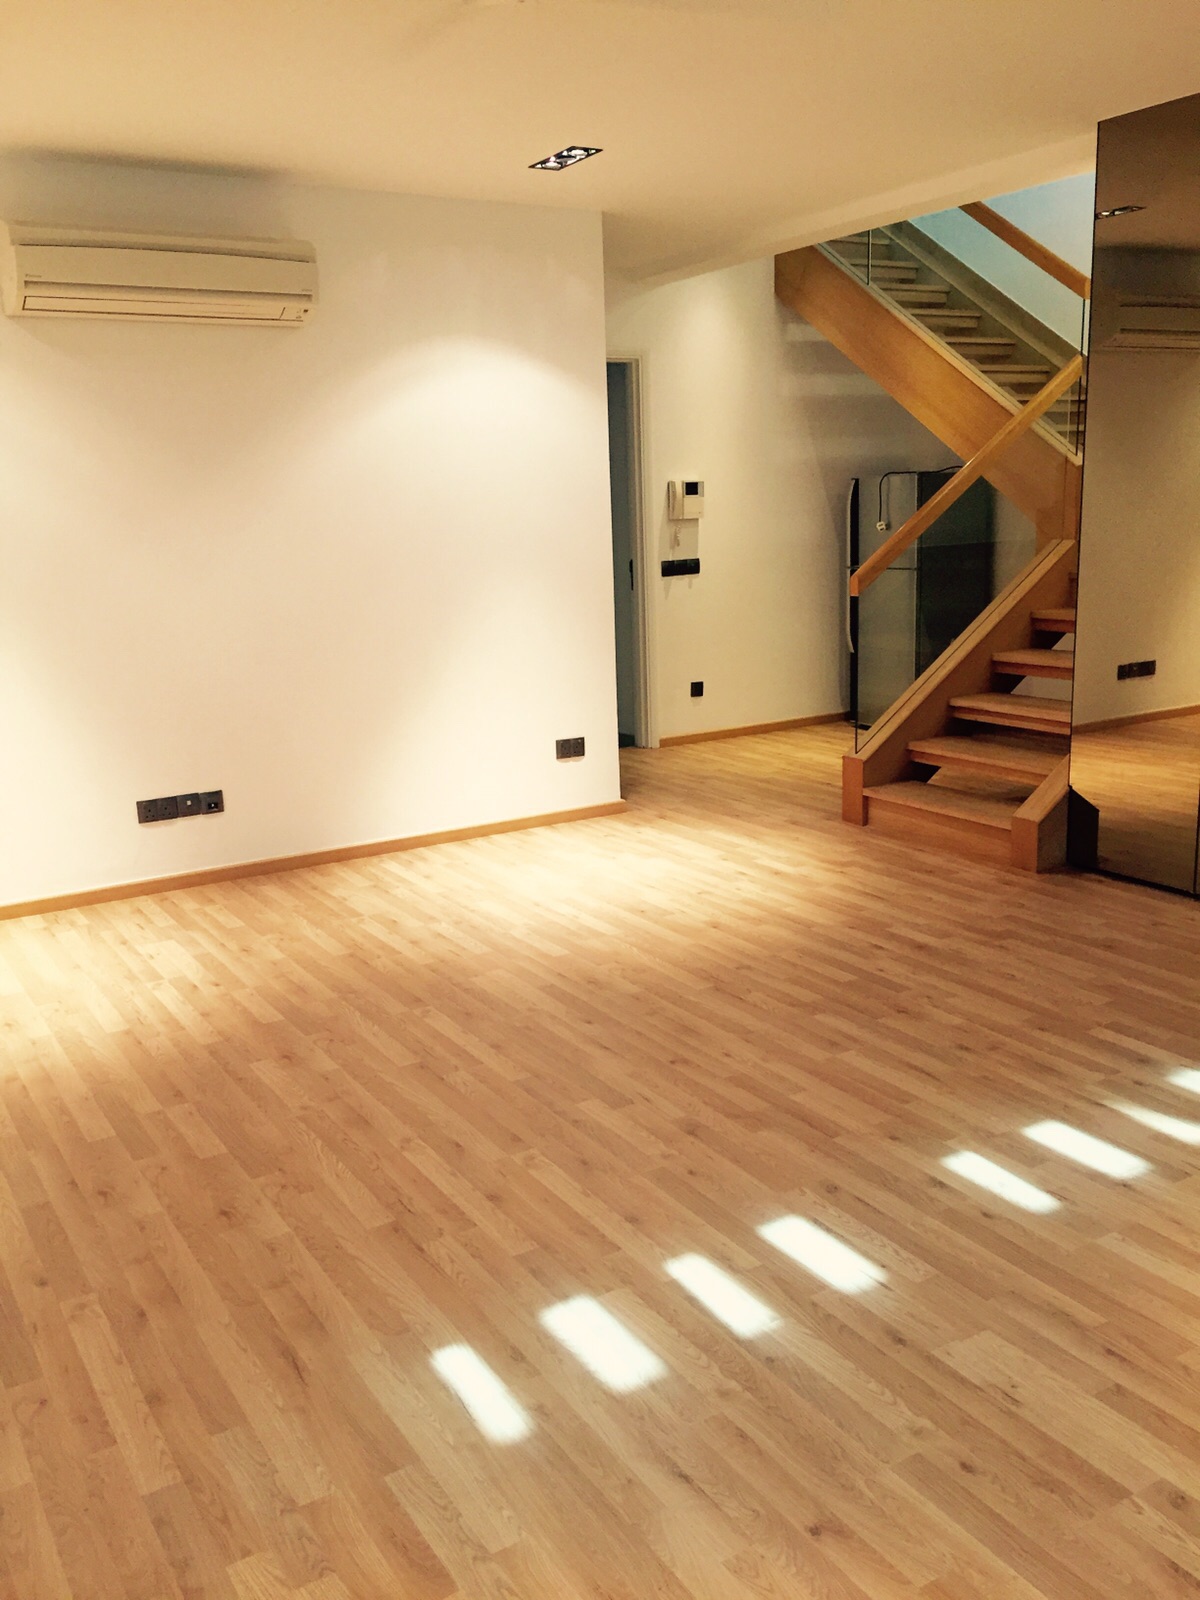 Quality Laminate Flooring - The Floor Gallery